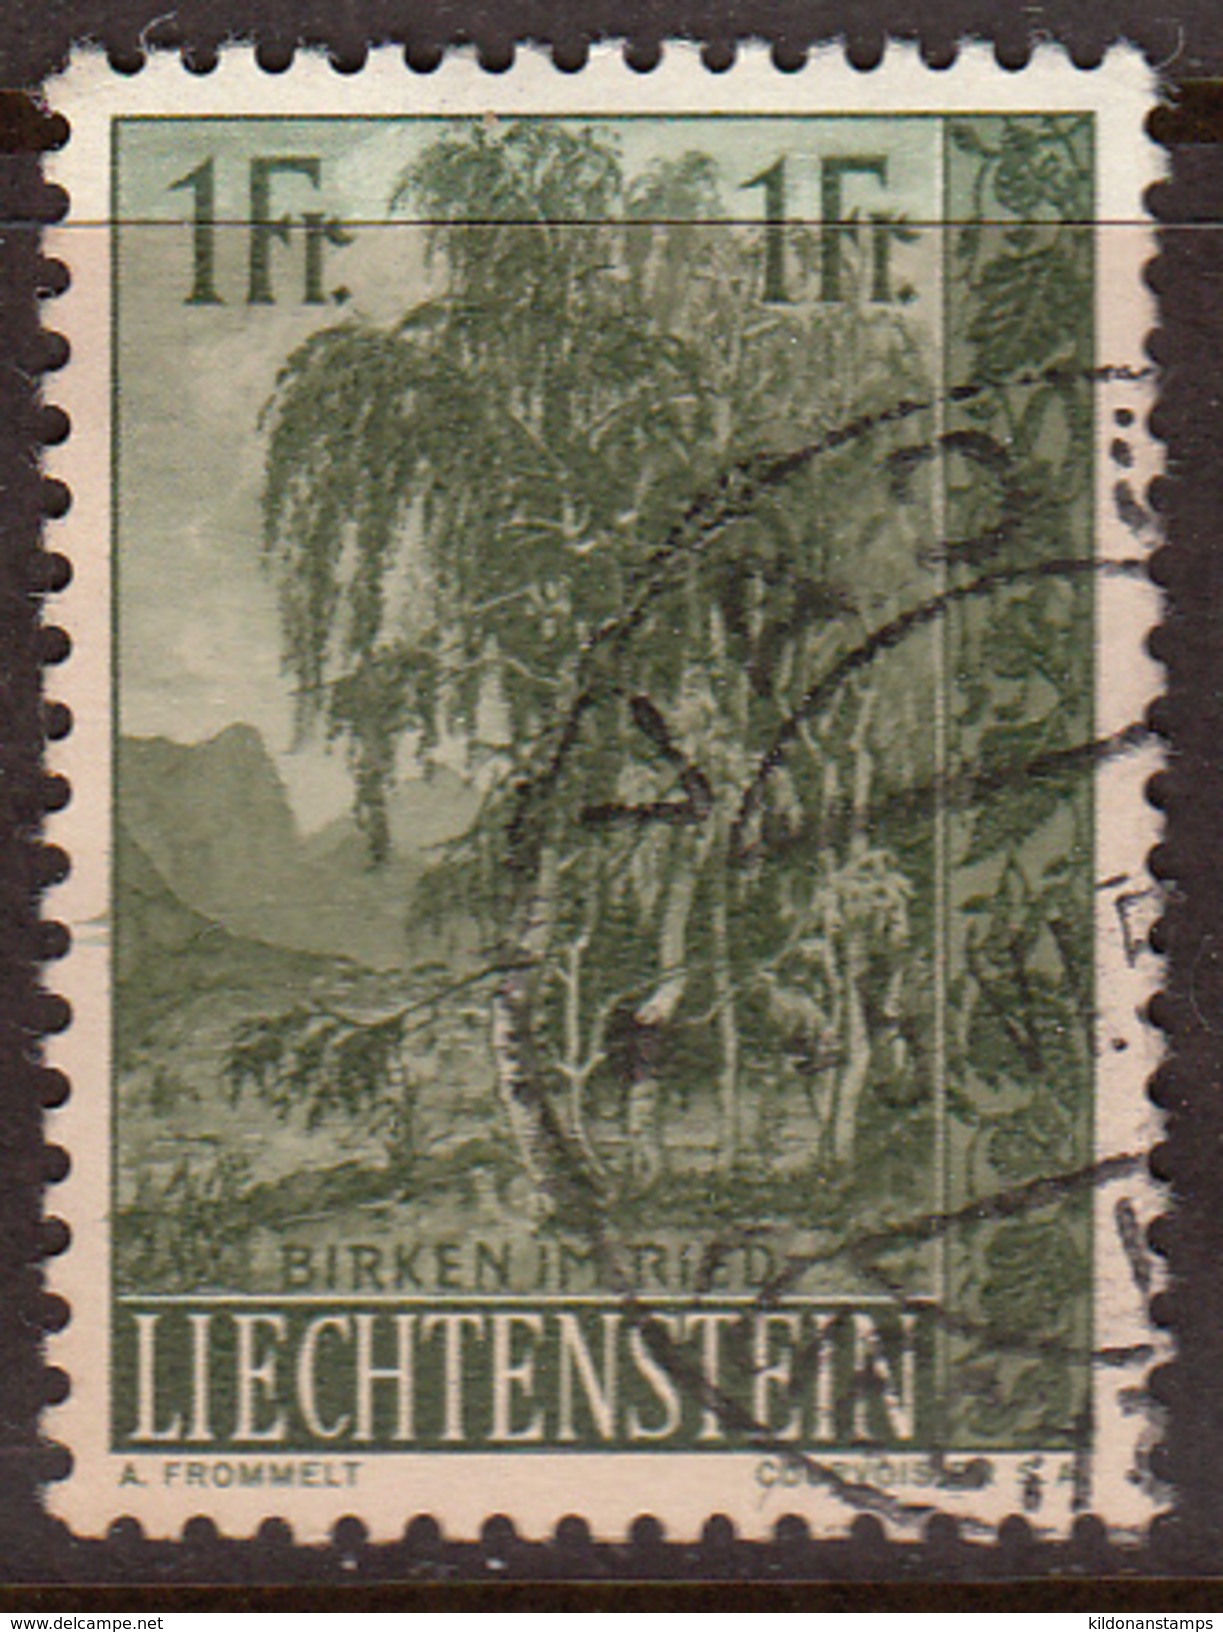 Liechtenstein 1957, Cancelled, Sc# 314 - Gebruikt